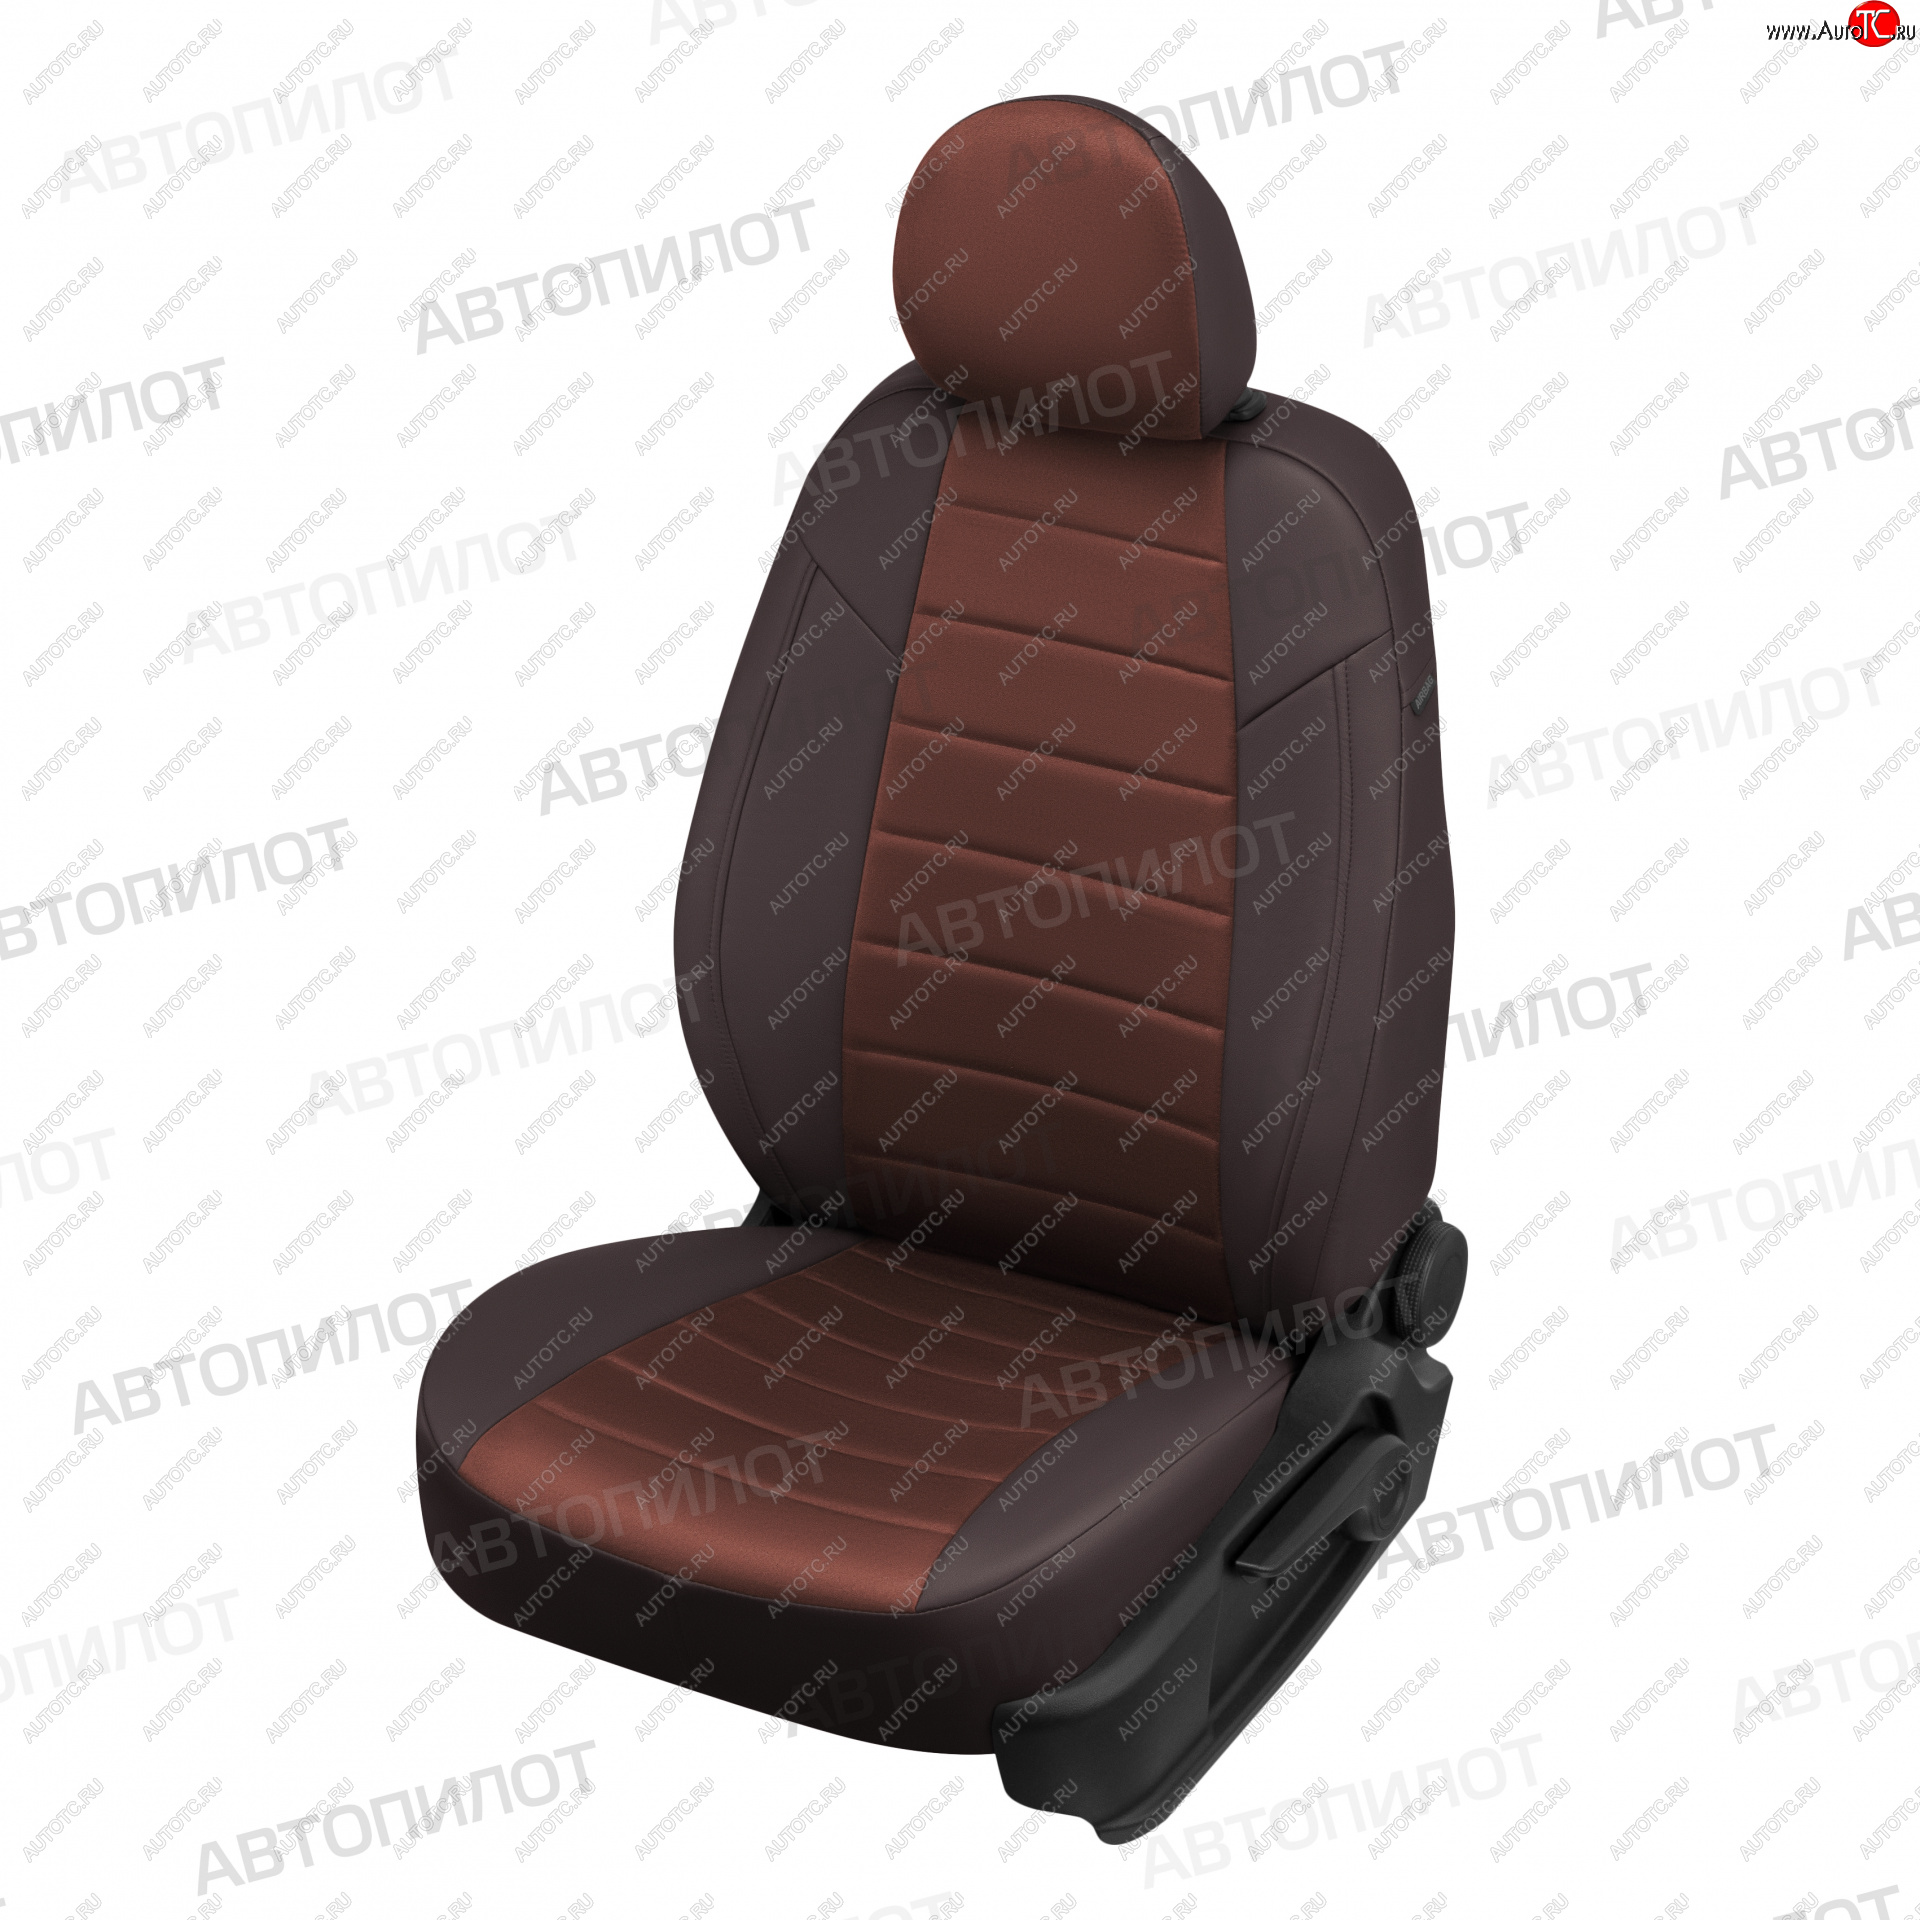 13 449 р. Чехлы сидений (экокожа/алькантара, 60/40) Автопилот  Hyundai Santa Fe  2 CM (2006-2012) (шоколад)